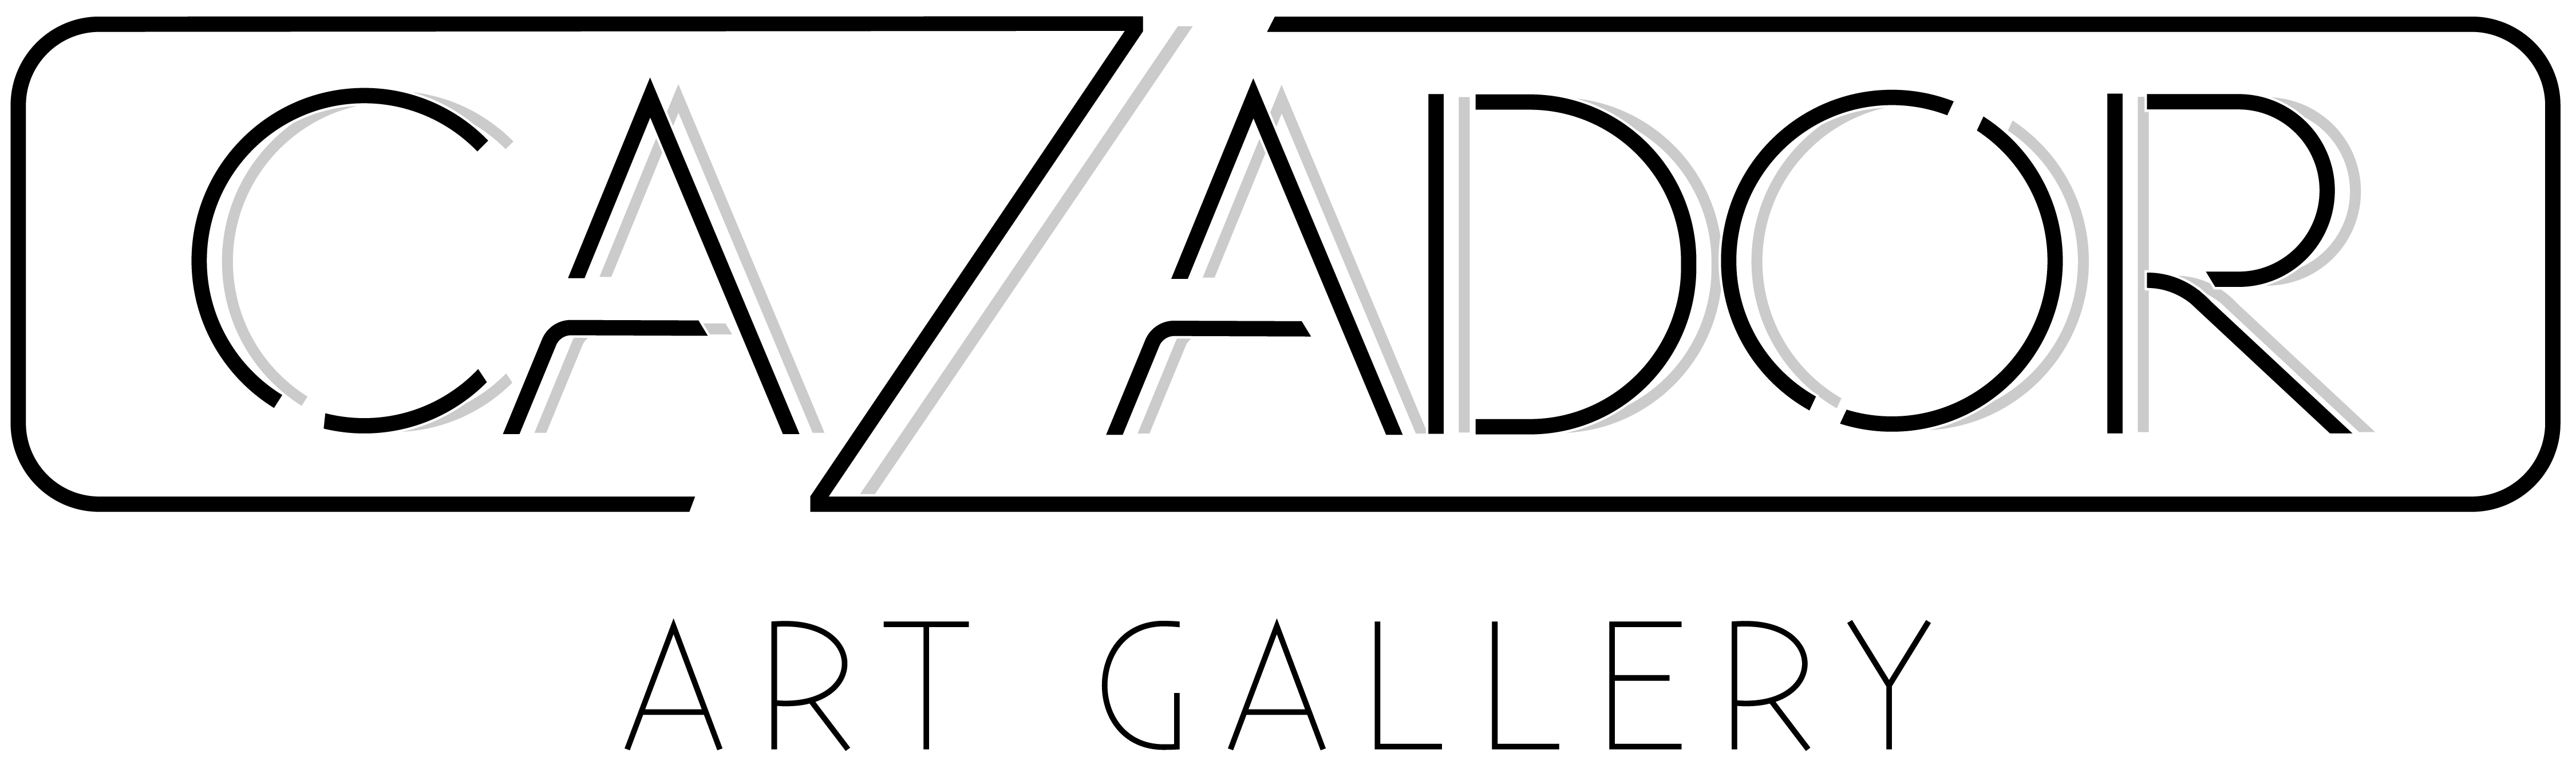 CAZADOR Art Gallery